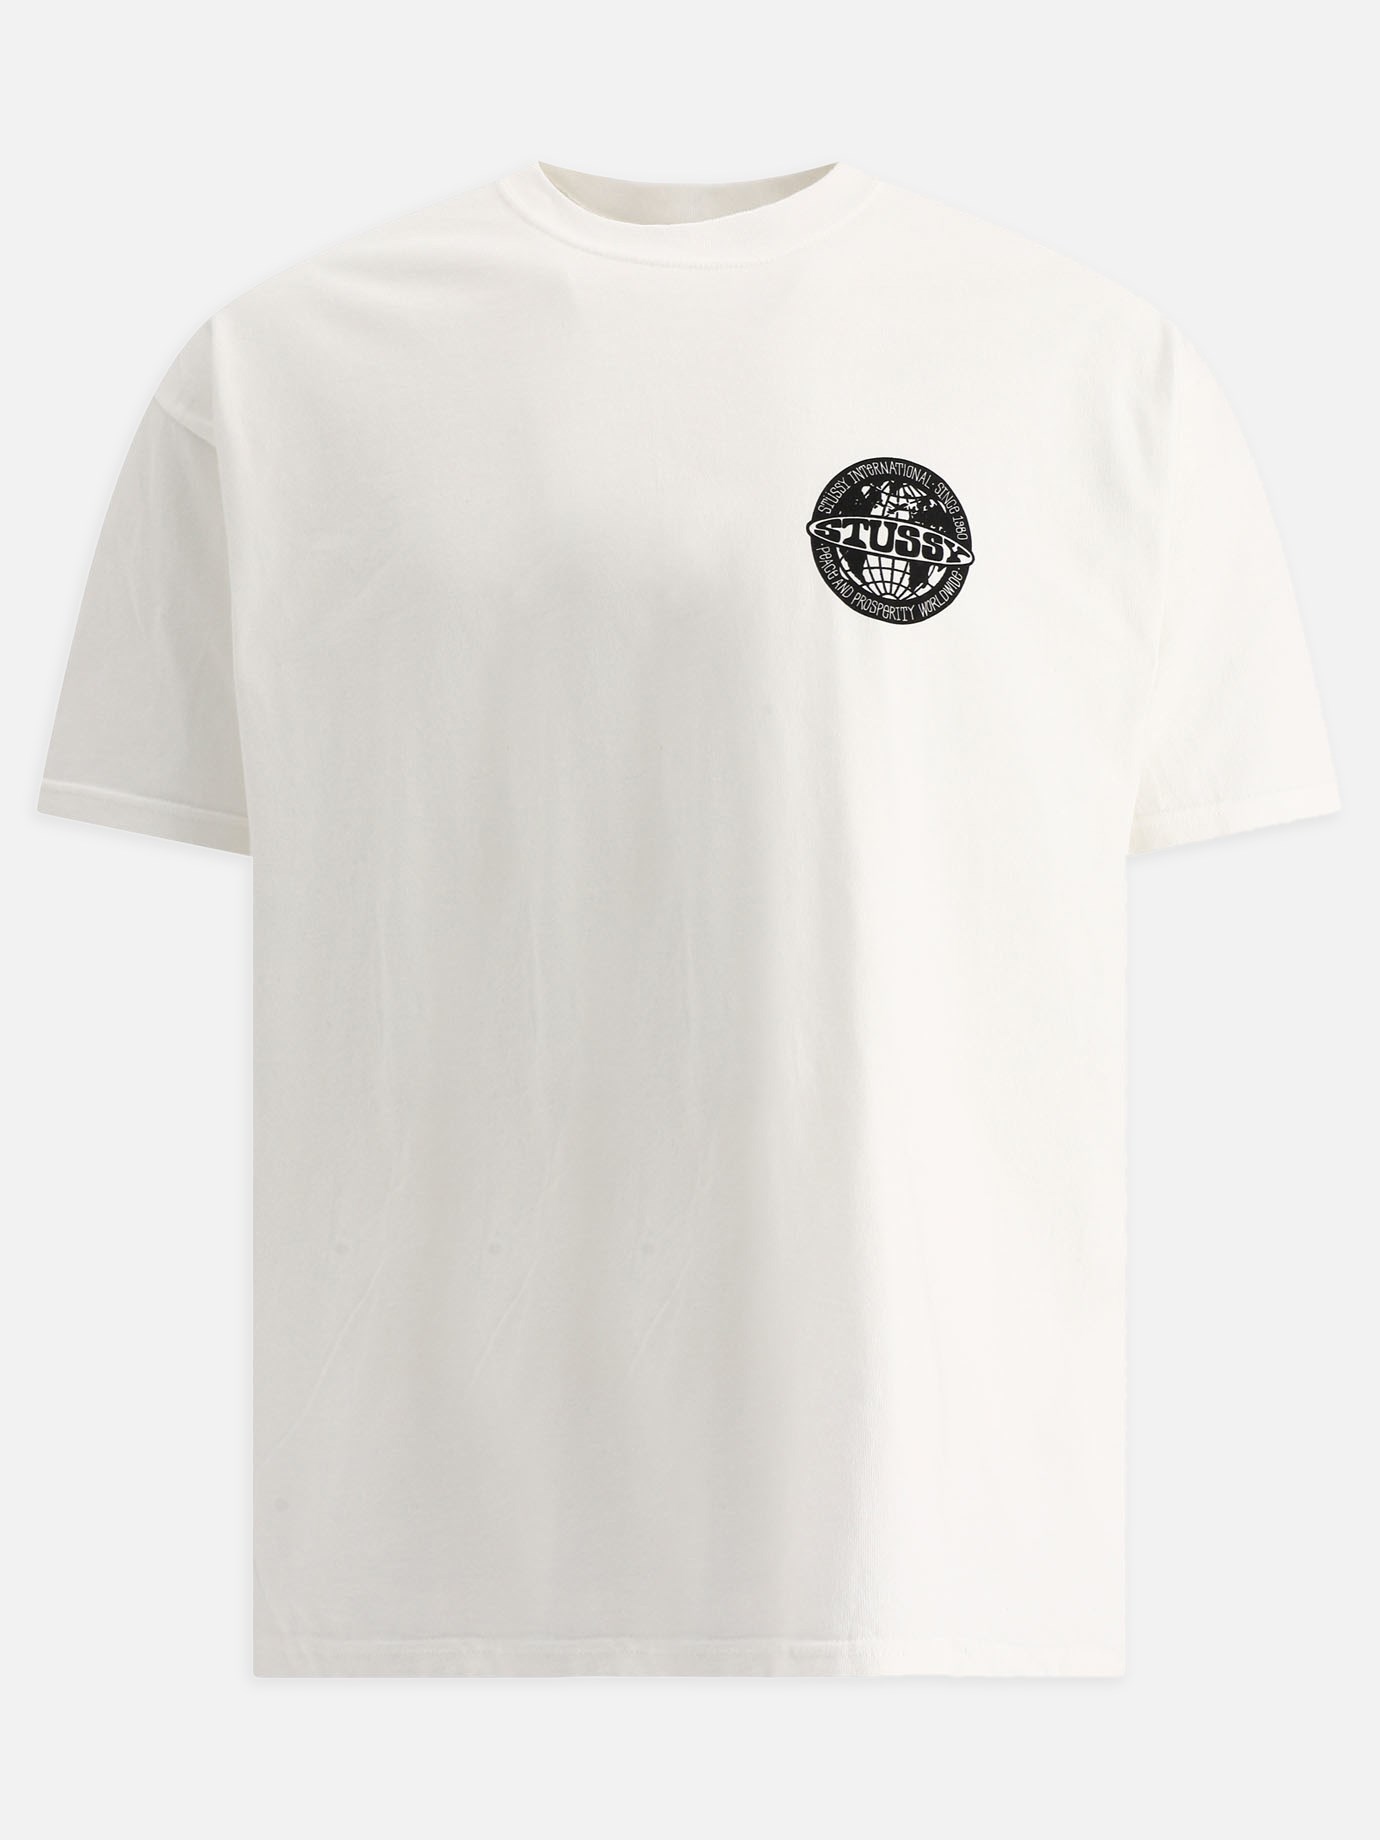 T-shirt  Worldwide Dot  by Stüssy